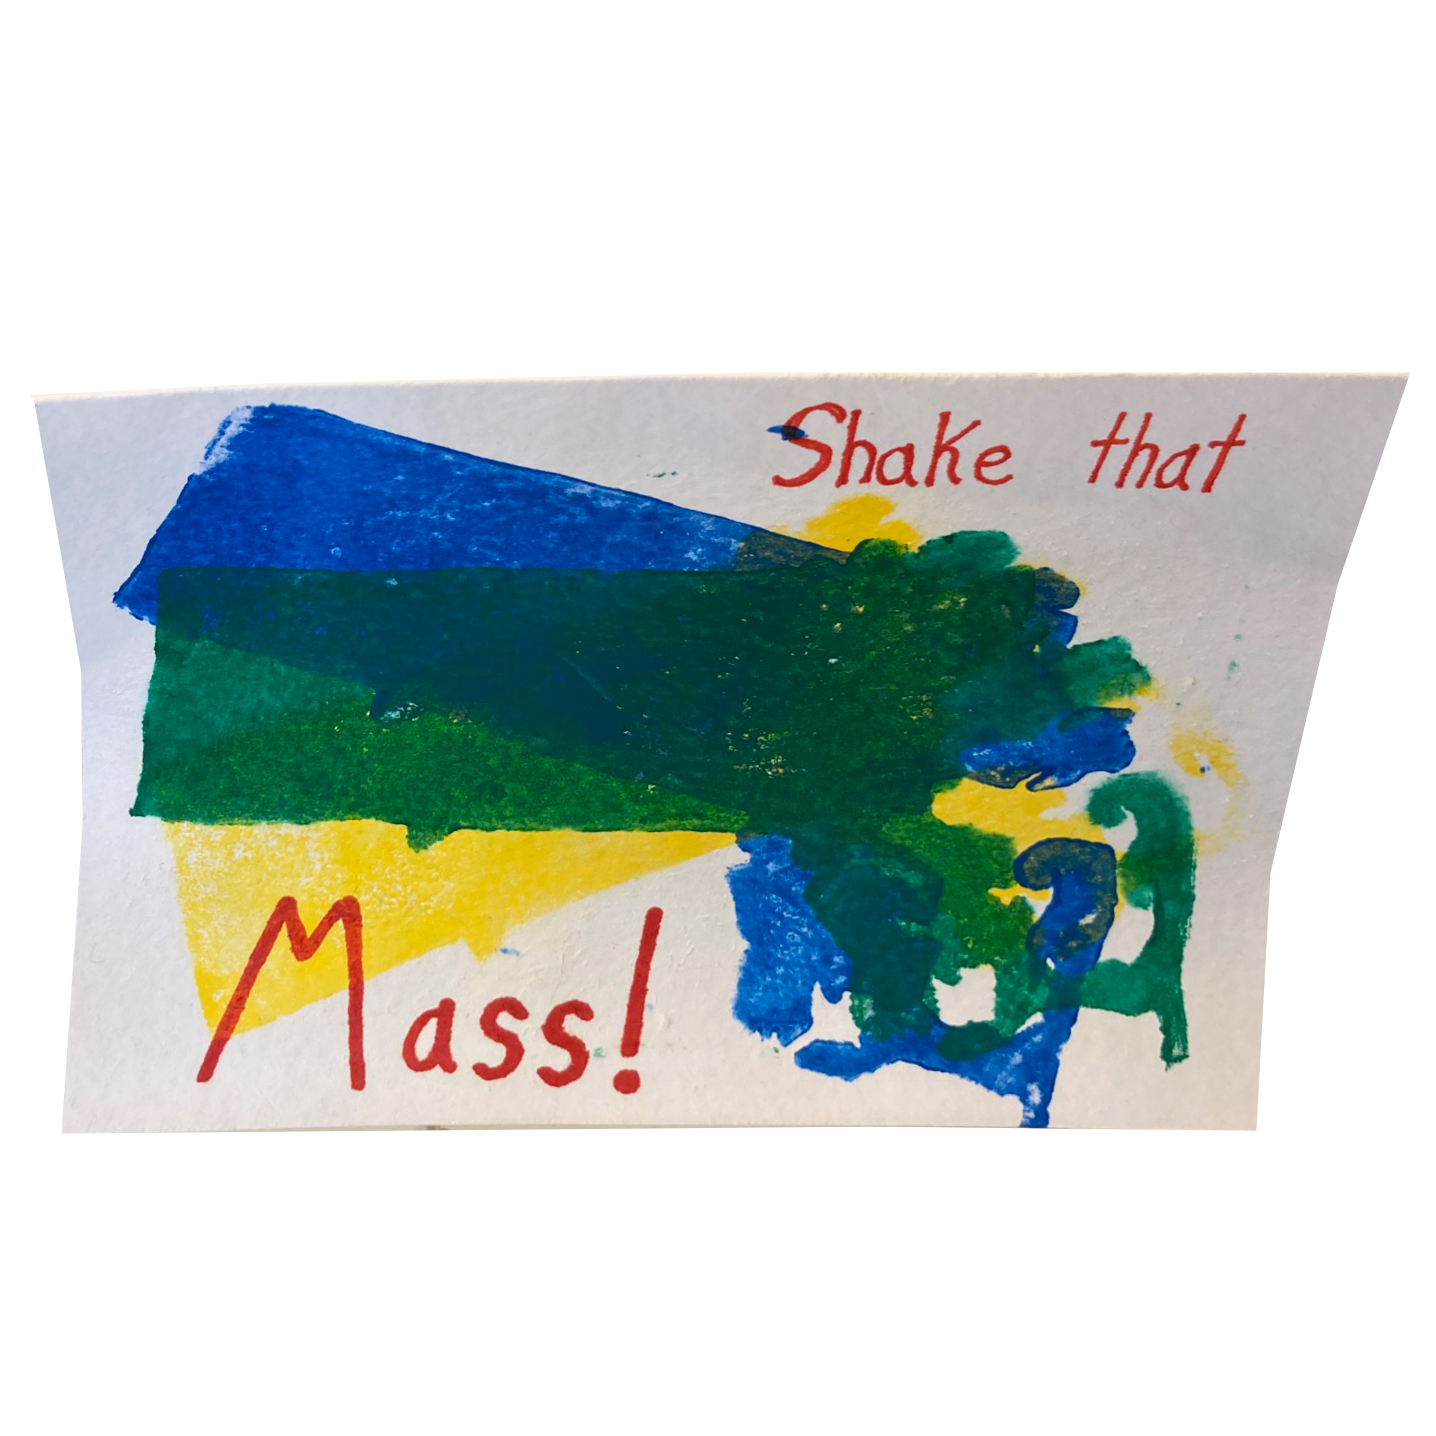 Shake that Mass! Card by Paul Eno